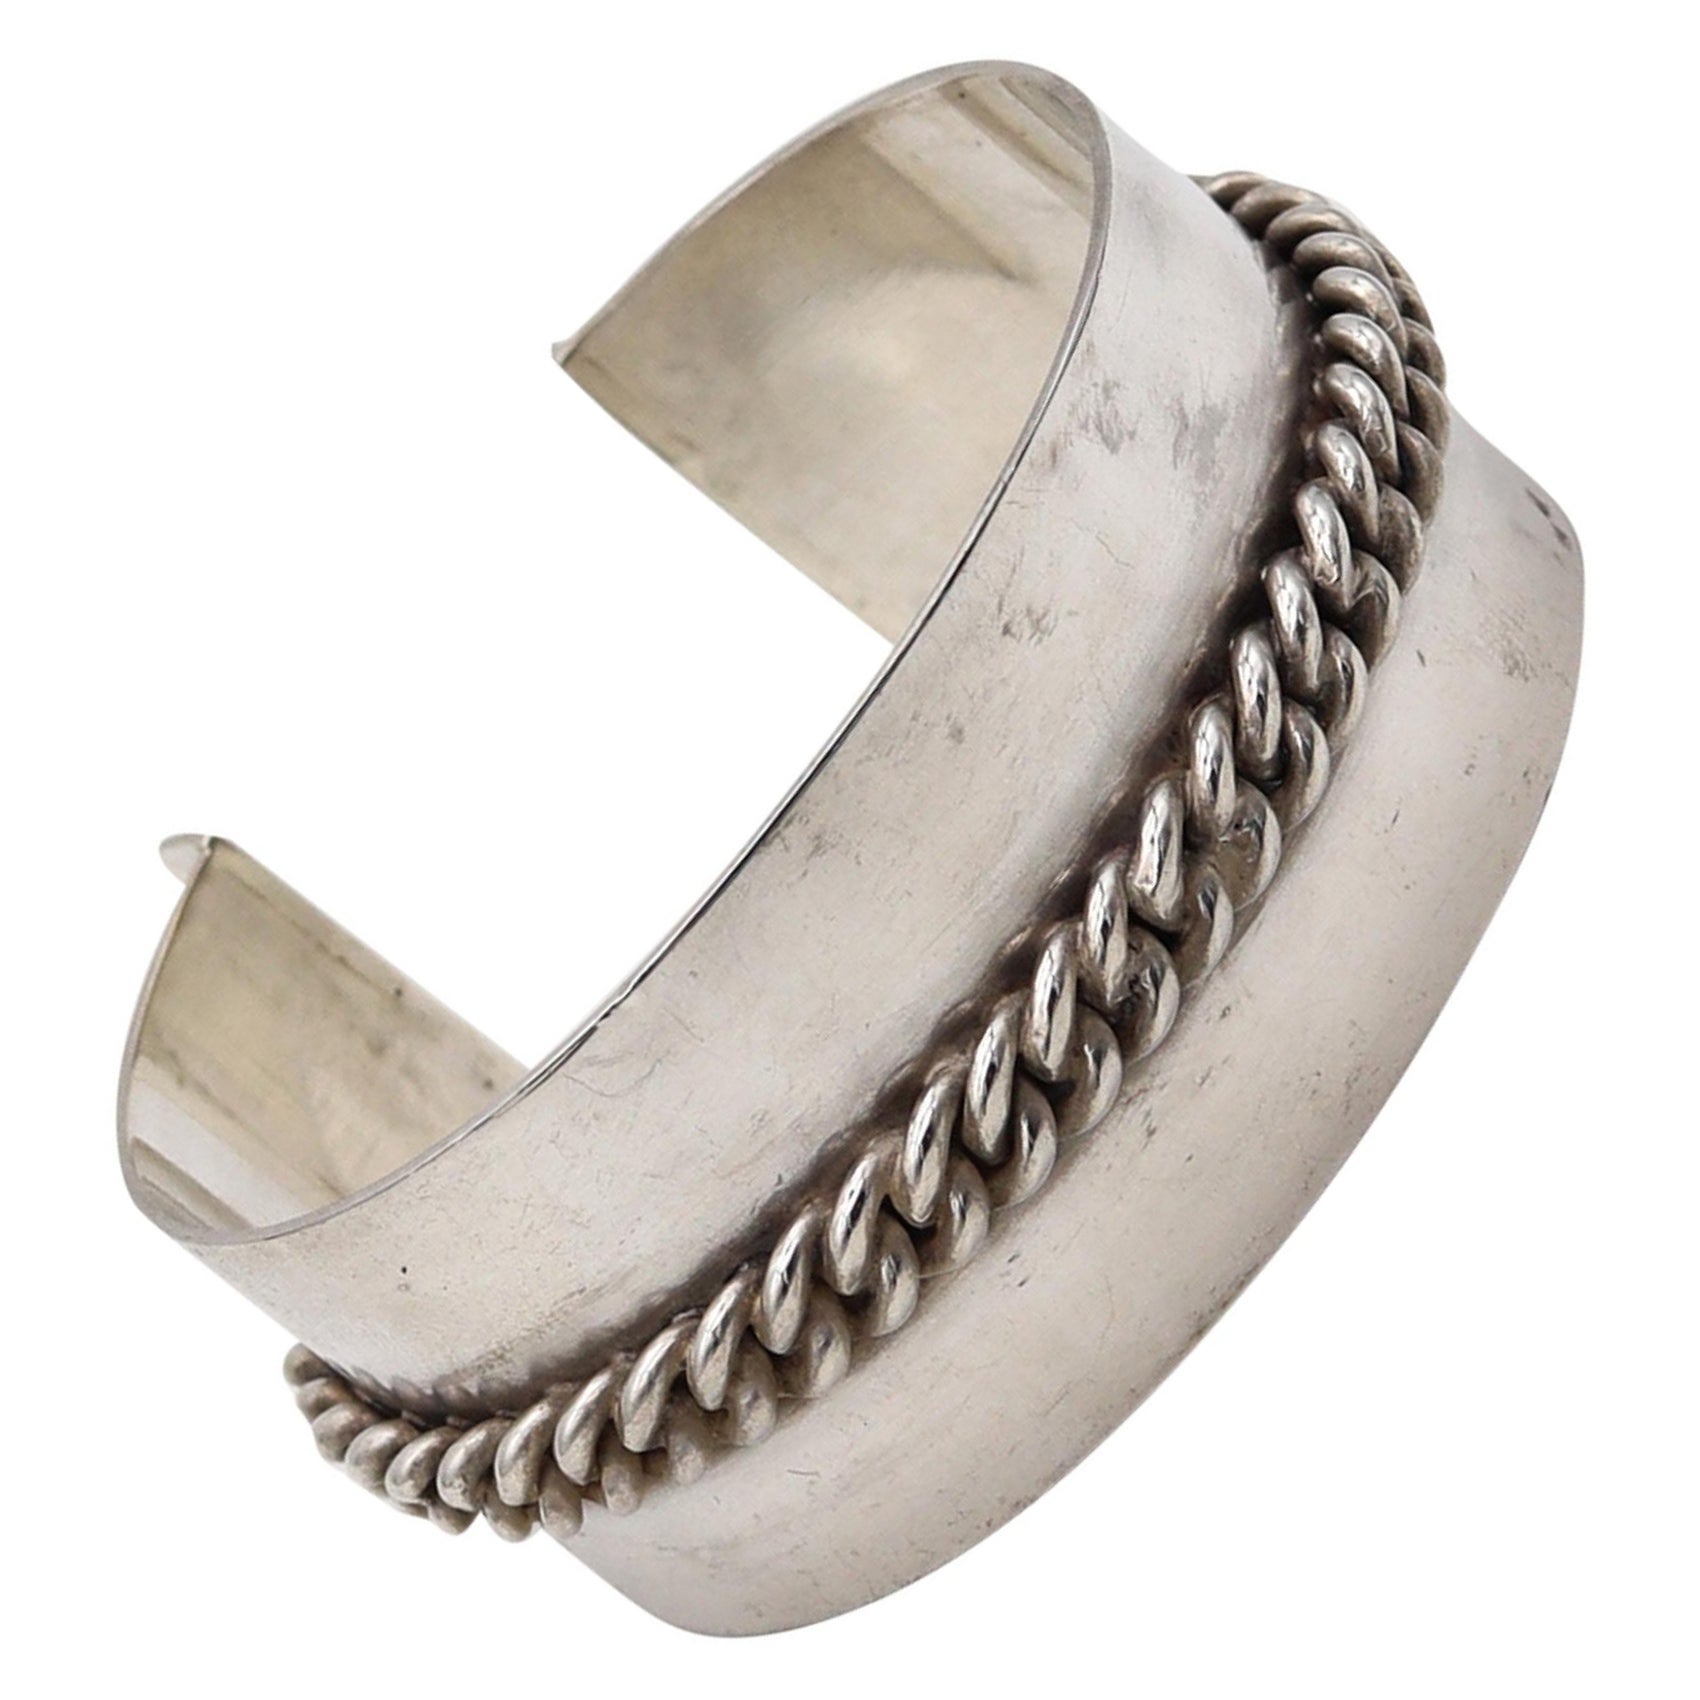 Jean Després 1960 Paris Artistic Cuff Bracelet In .800 Silver With Chained Links For Sale